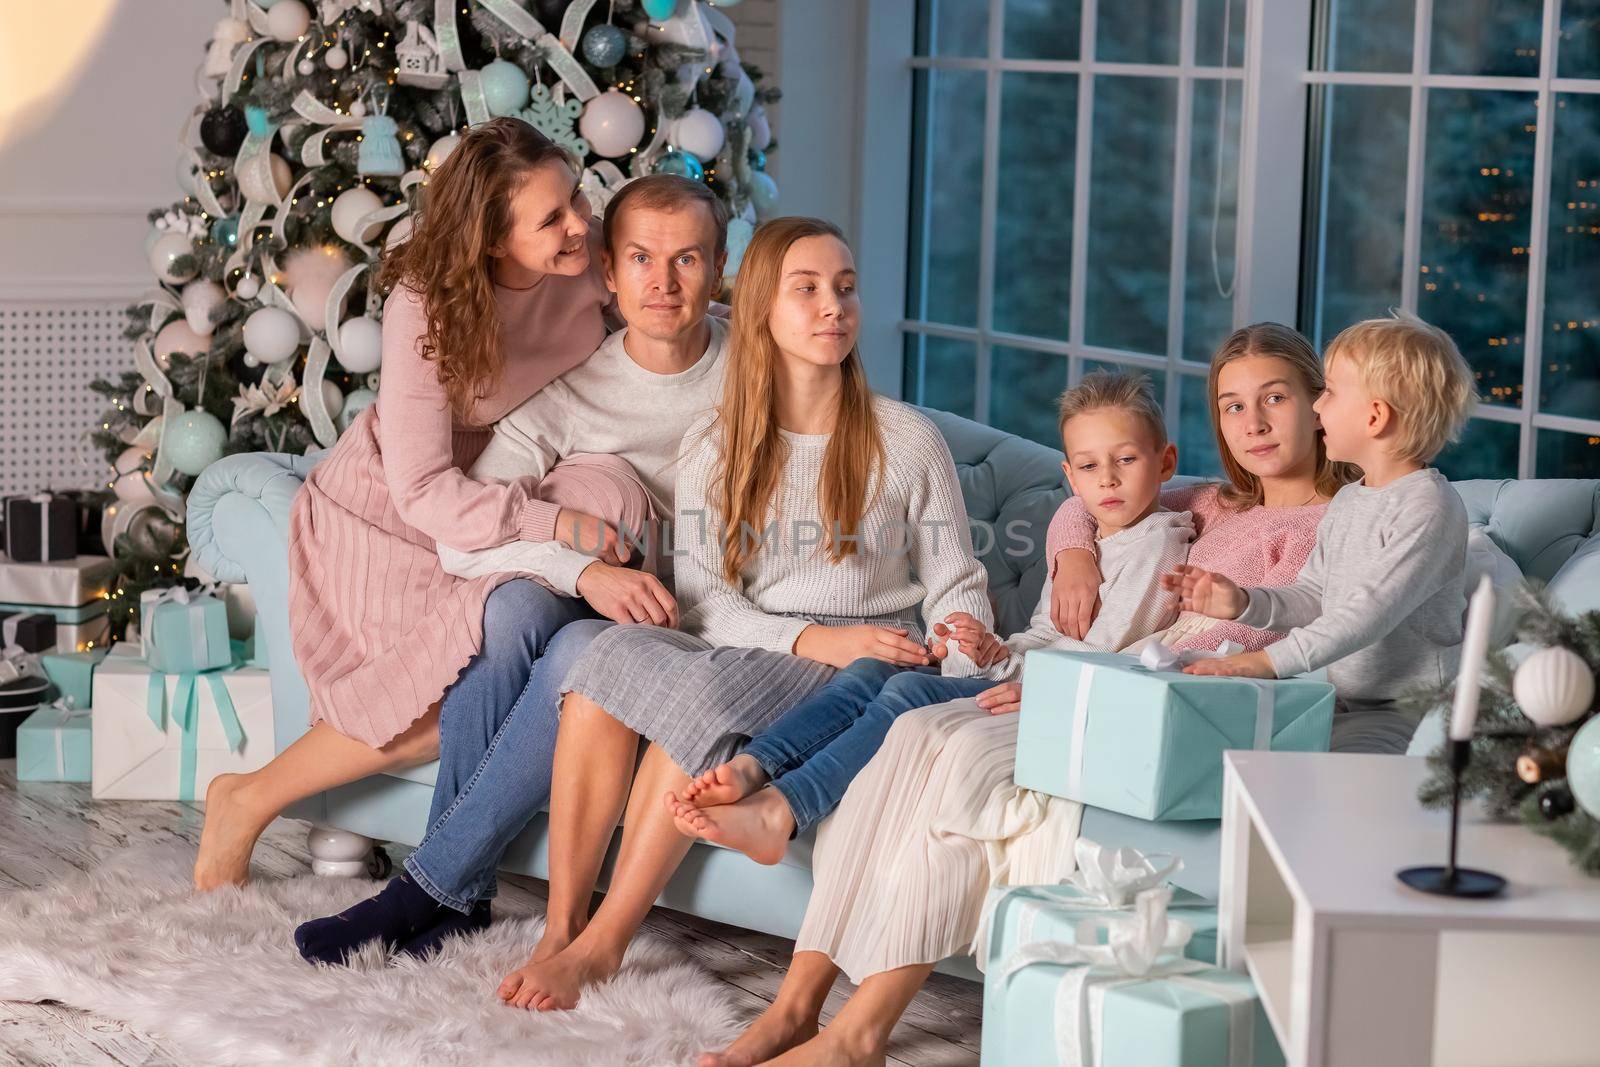 Big happy family with many kids having fun on the sofa near the Christmas tree on Christmas eve by Len44ik